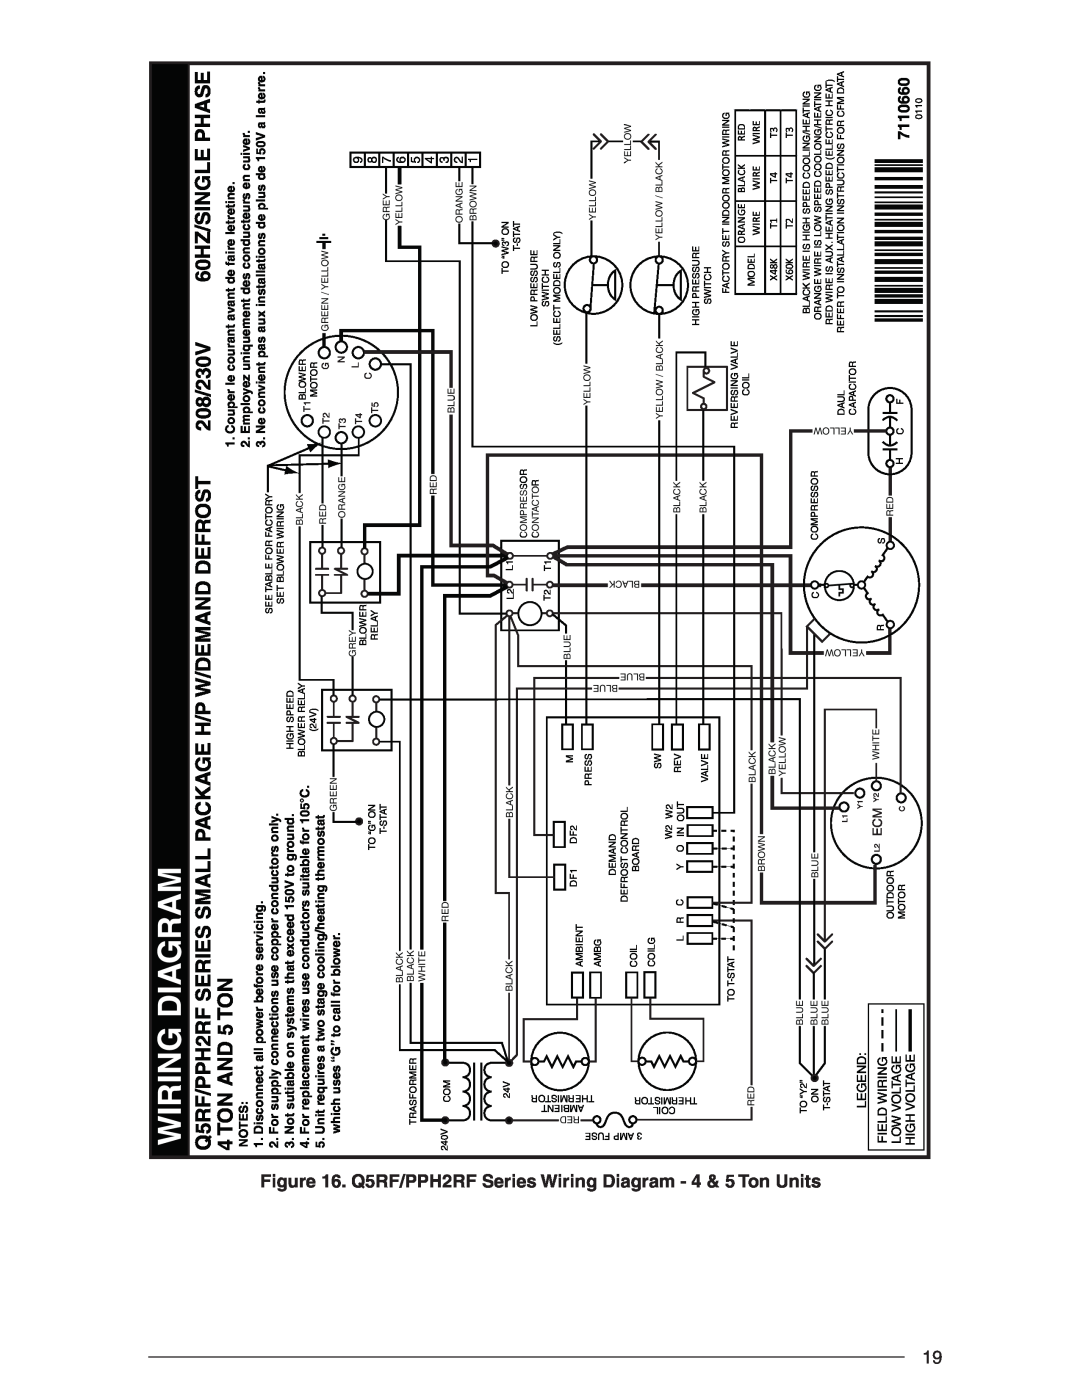 Acnodes Q5RF SERIES user manual ¢711066#¤, Wiring Diagram, 208/230V, TON AND 5 TON, 60HZ/SINGLE PHASE, 7110660 